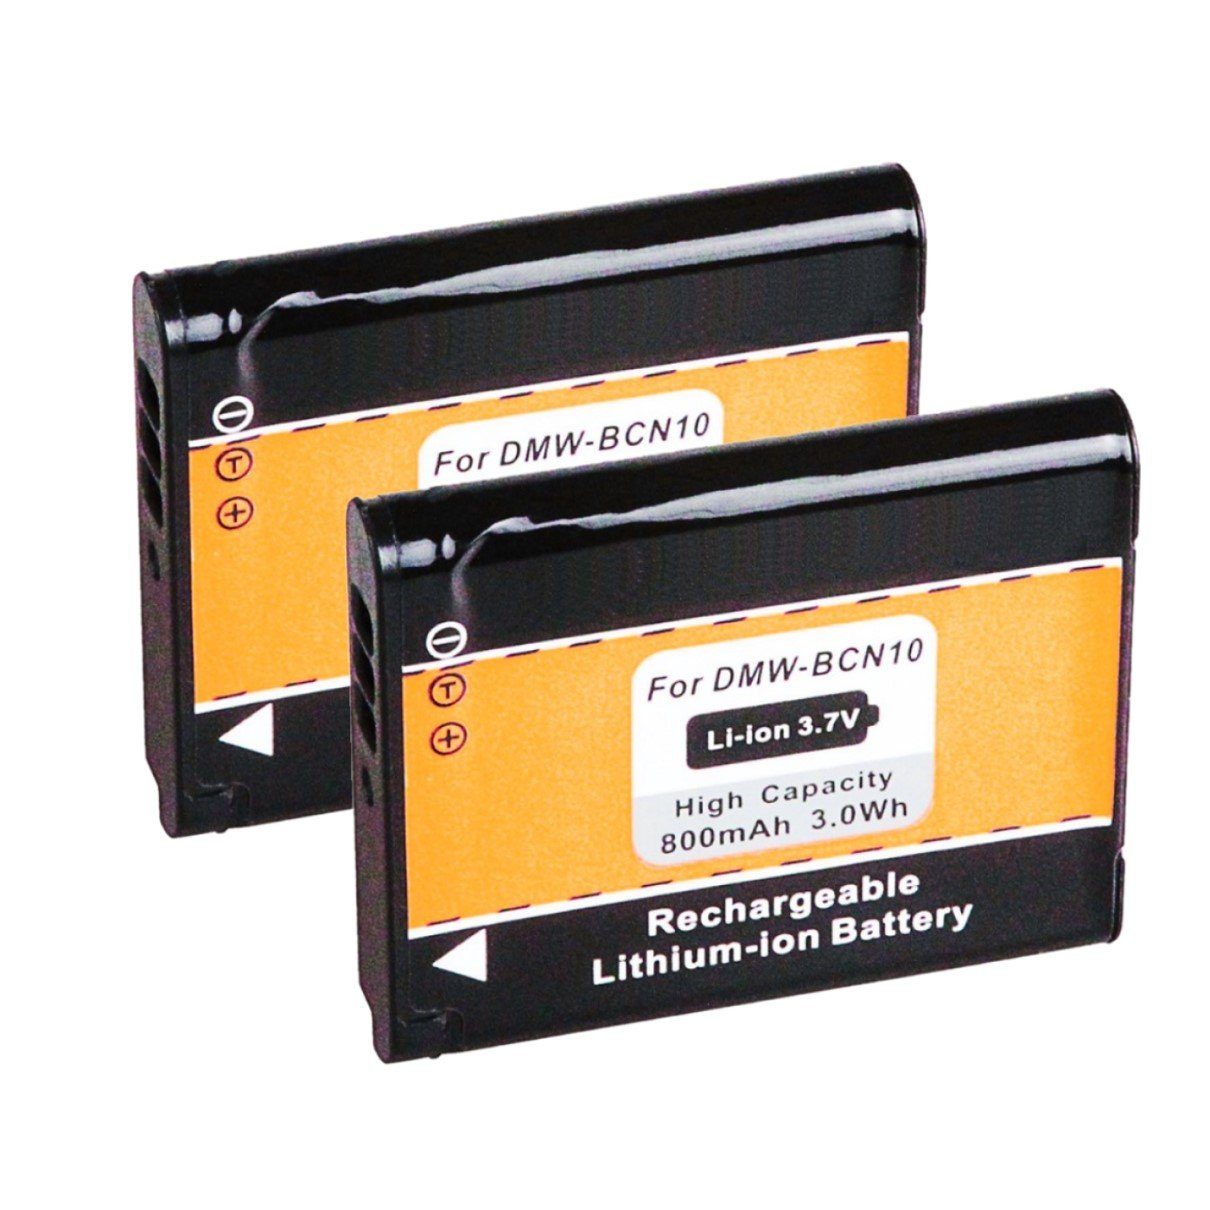 GOLDBATT 2x Akku für Panasonic DMW-BCN10 LUMIX DMC-LF1 LF1K LF1W BCN10 BCN10E BCN10PP Kamera-Akku Ersatzakku 800 mAh (3,7 V, 2 St), 100% kompatibel mit den Original Akkus durch maßgefertigte Passform inklusive Überhitzungsschutz